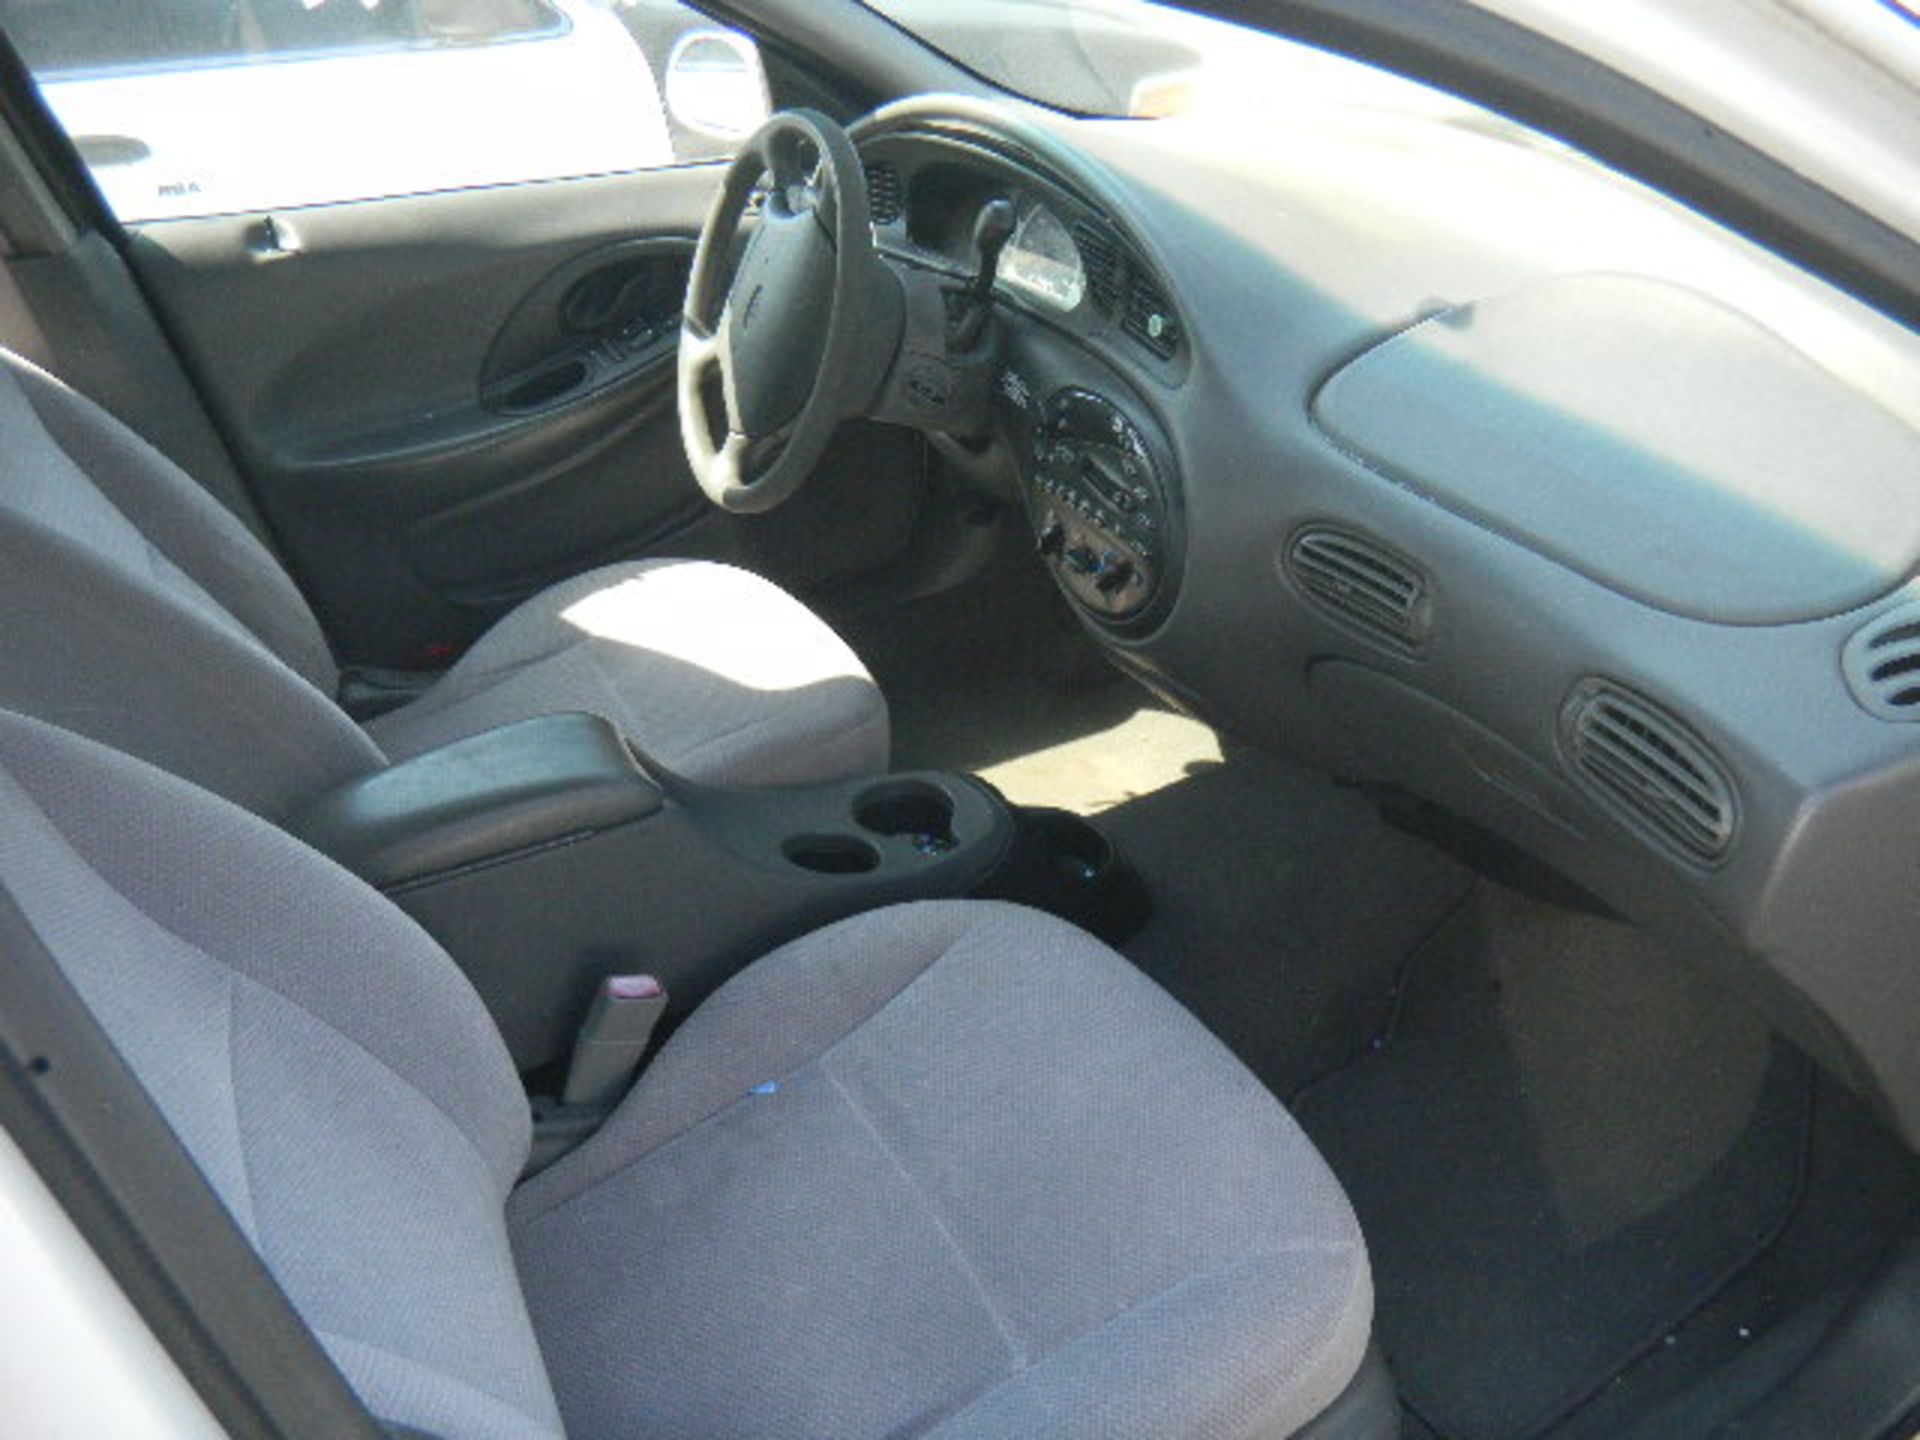 1999 Ford Taurus SE 4 Door - Asset I.D. #492 - Last of Vin (220300) - Image 4 of 7